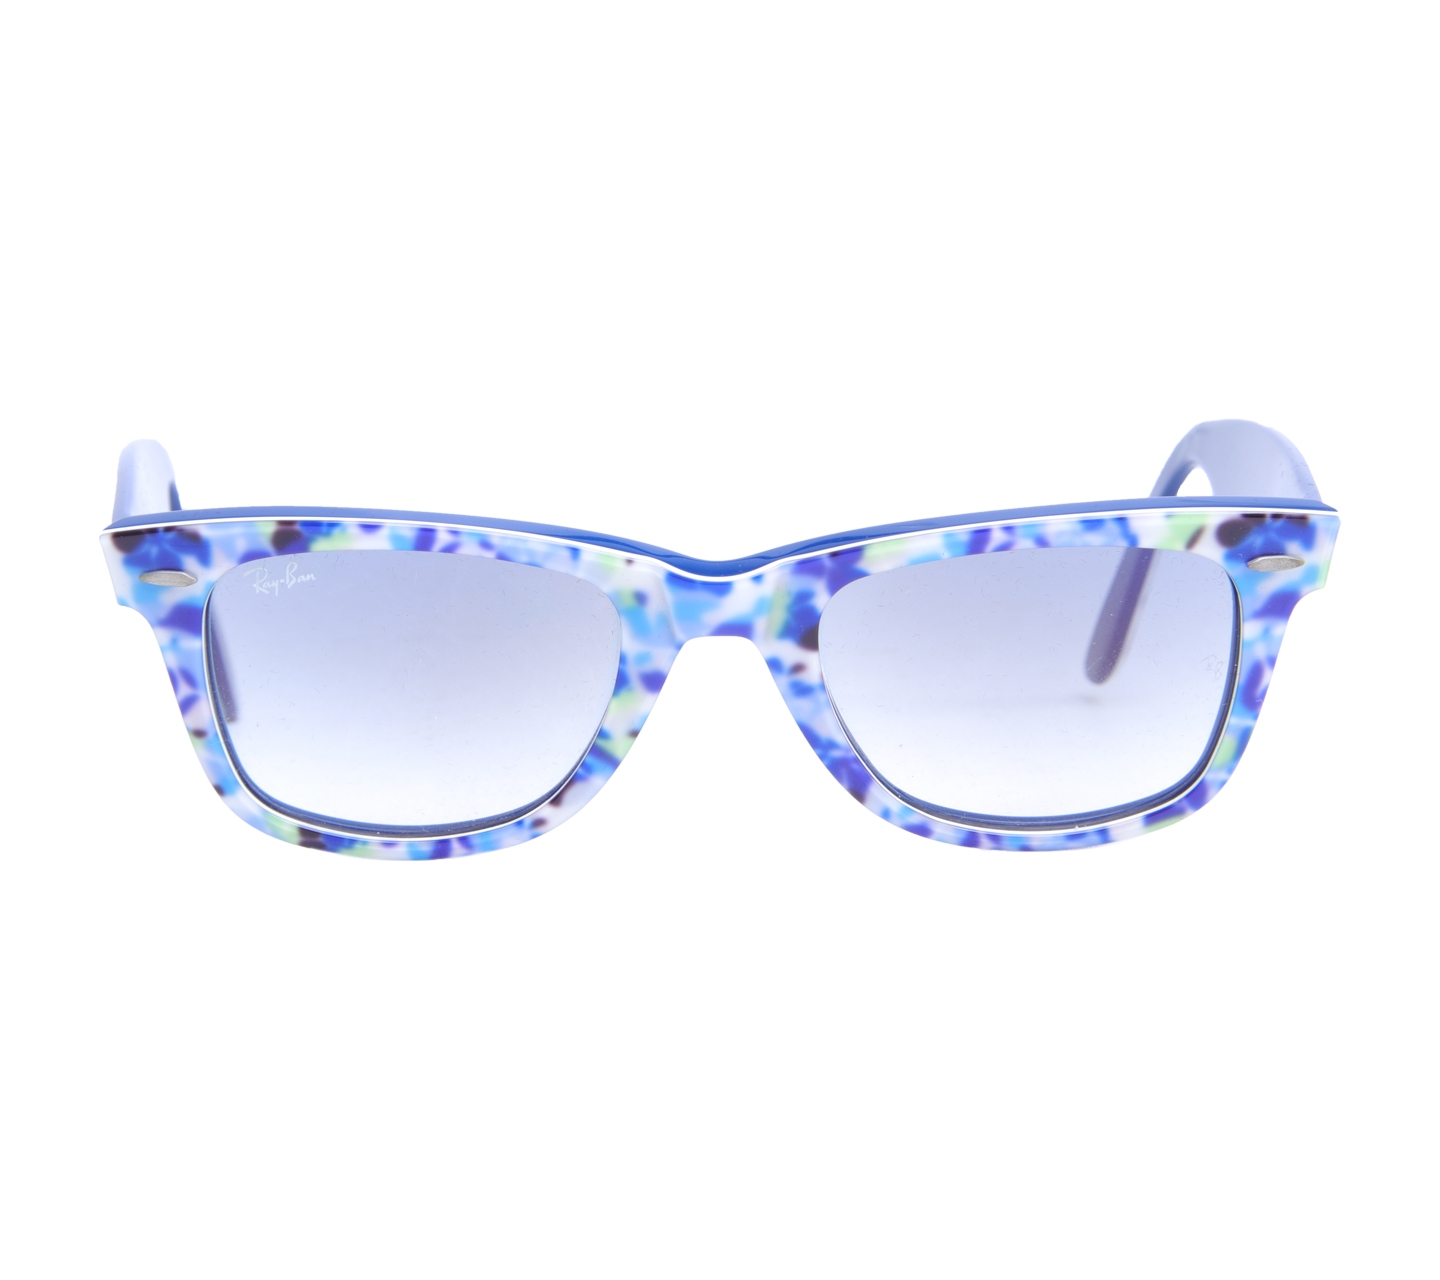 Ray-Ban Blue Wayfarer Special Series #1 Sunglasses